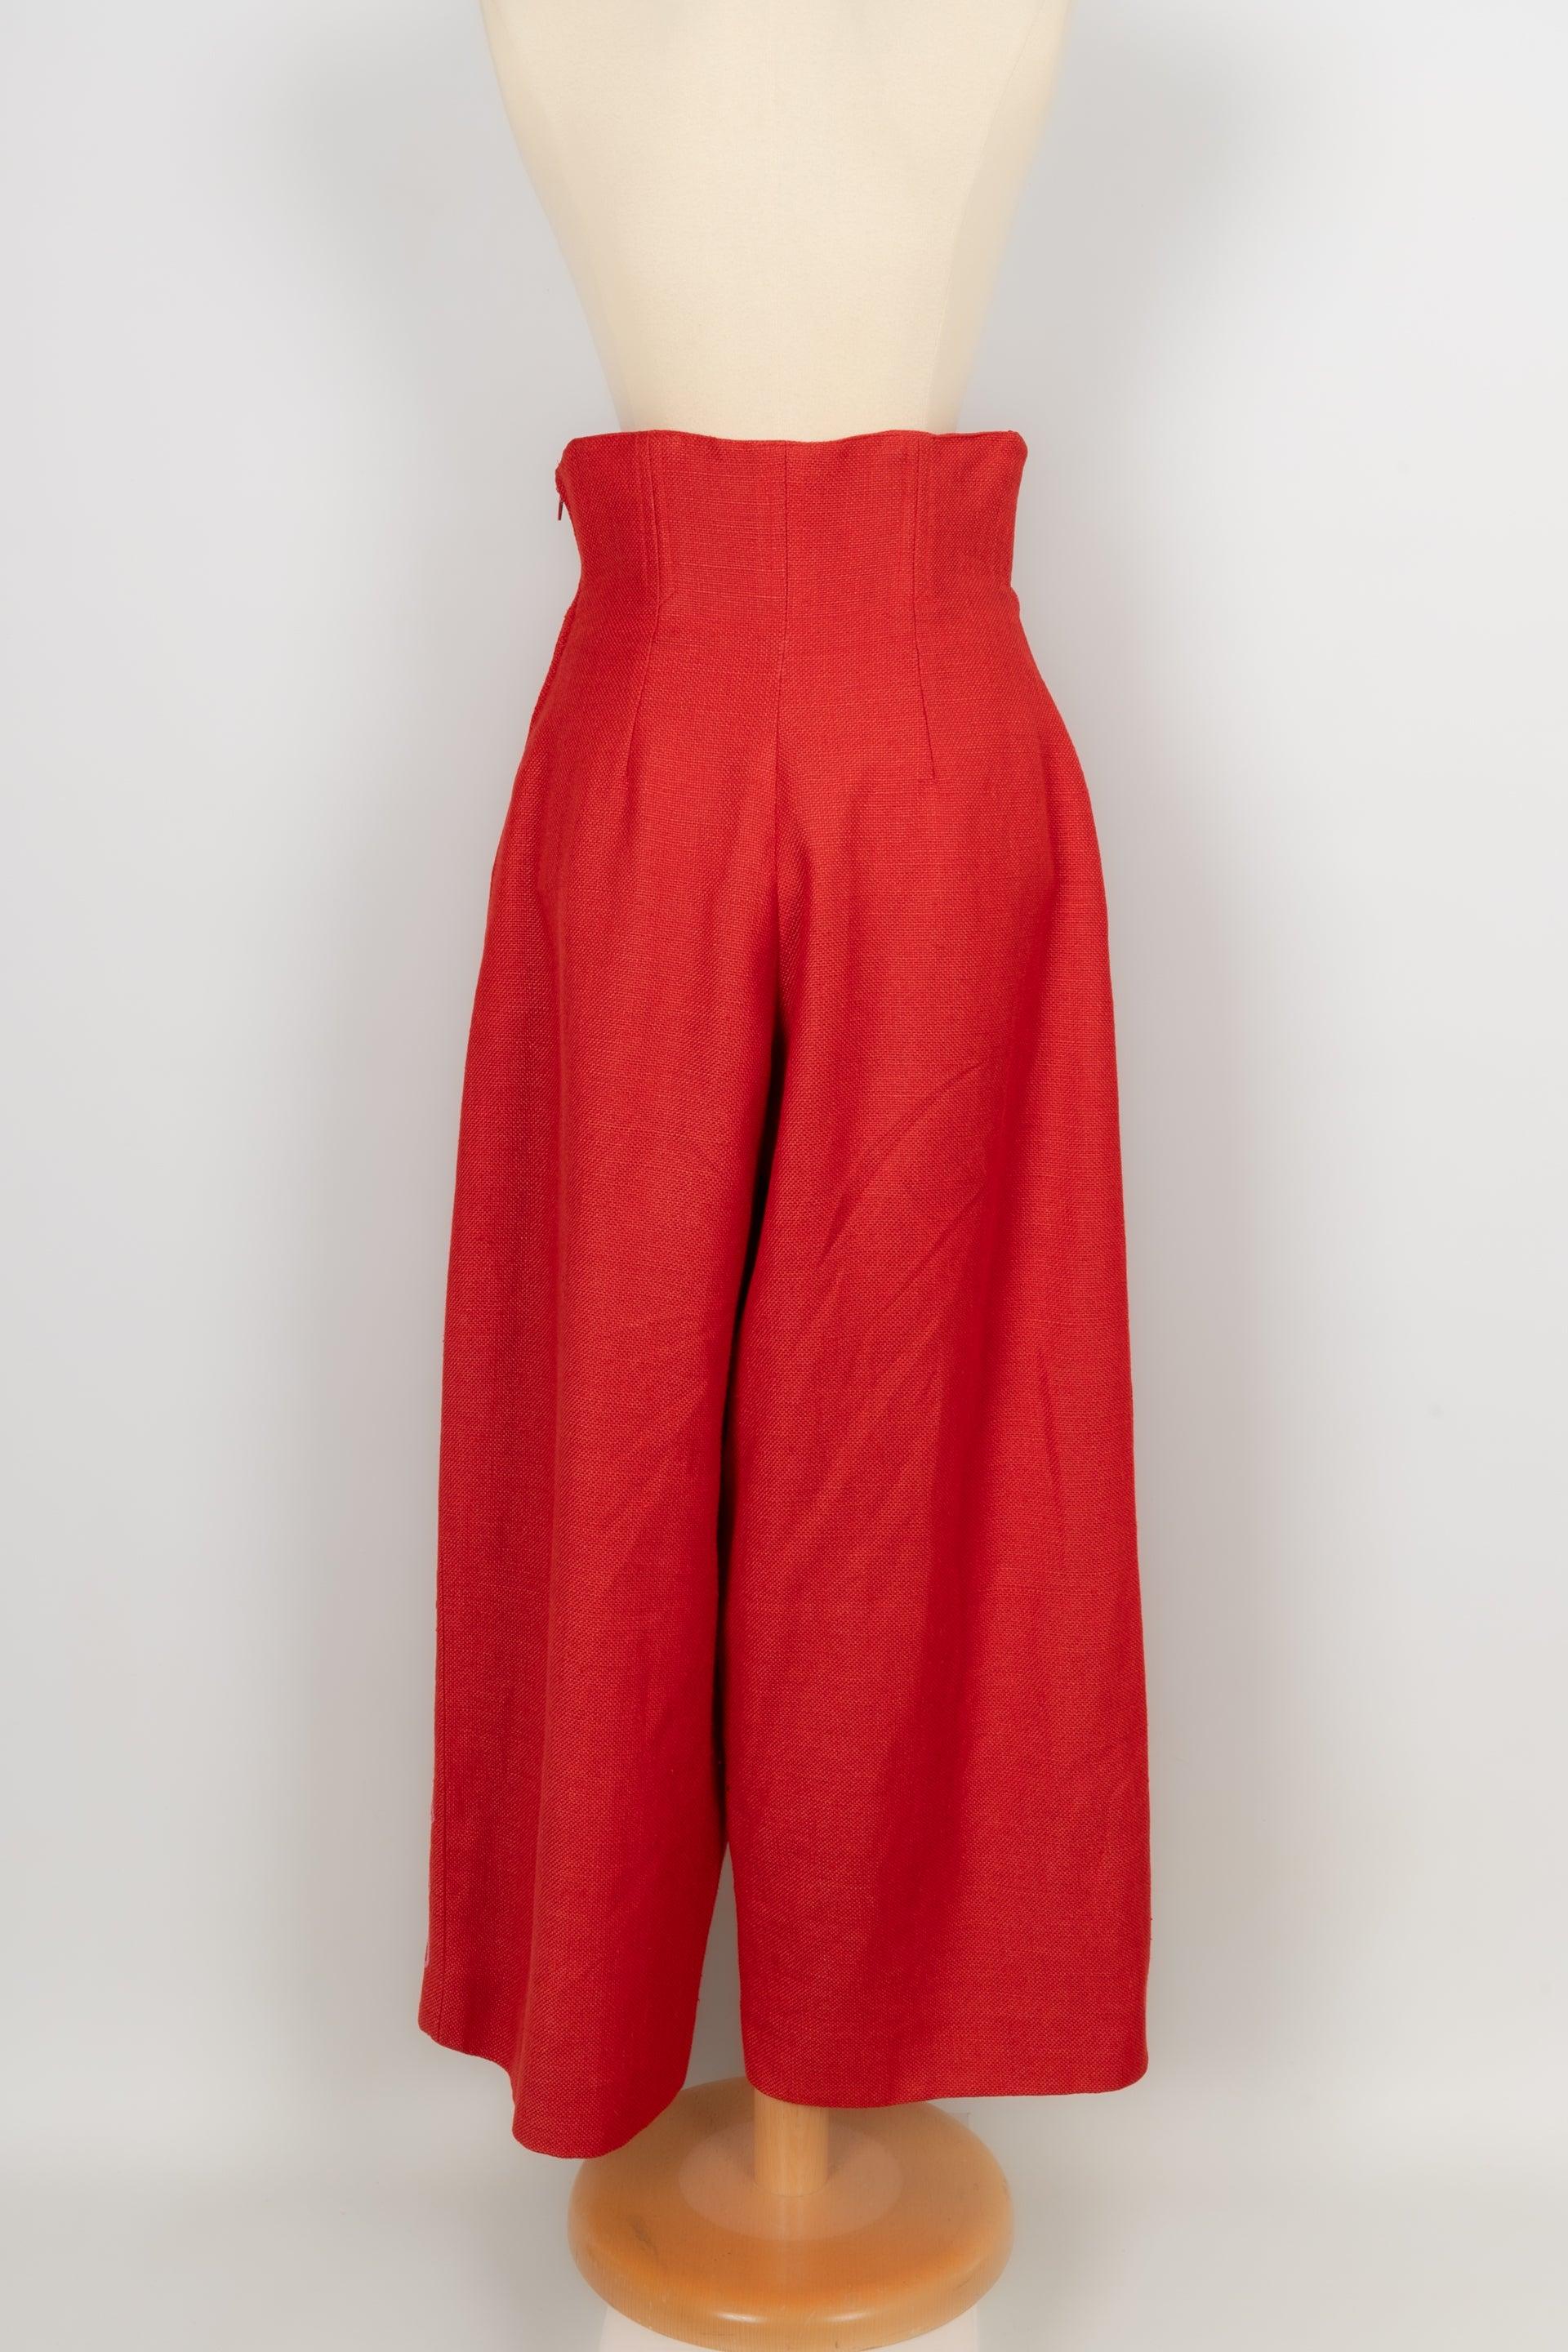 Red Christian Lacroix Orange Linen Pants Spring, 1998 For Sale